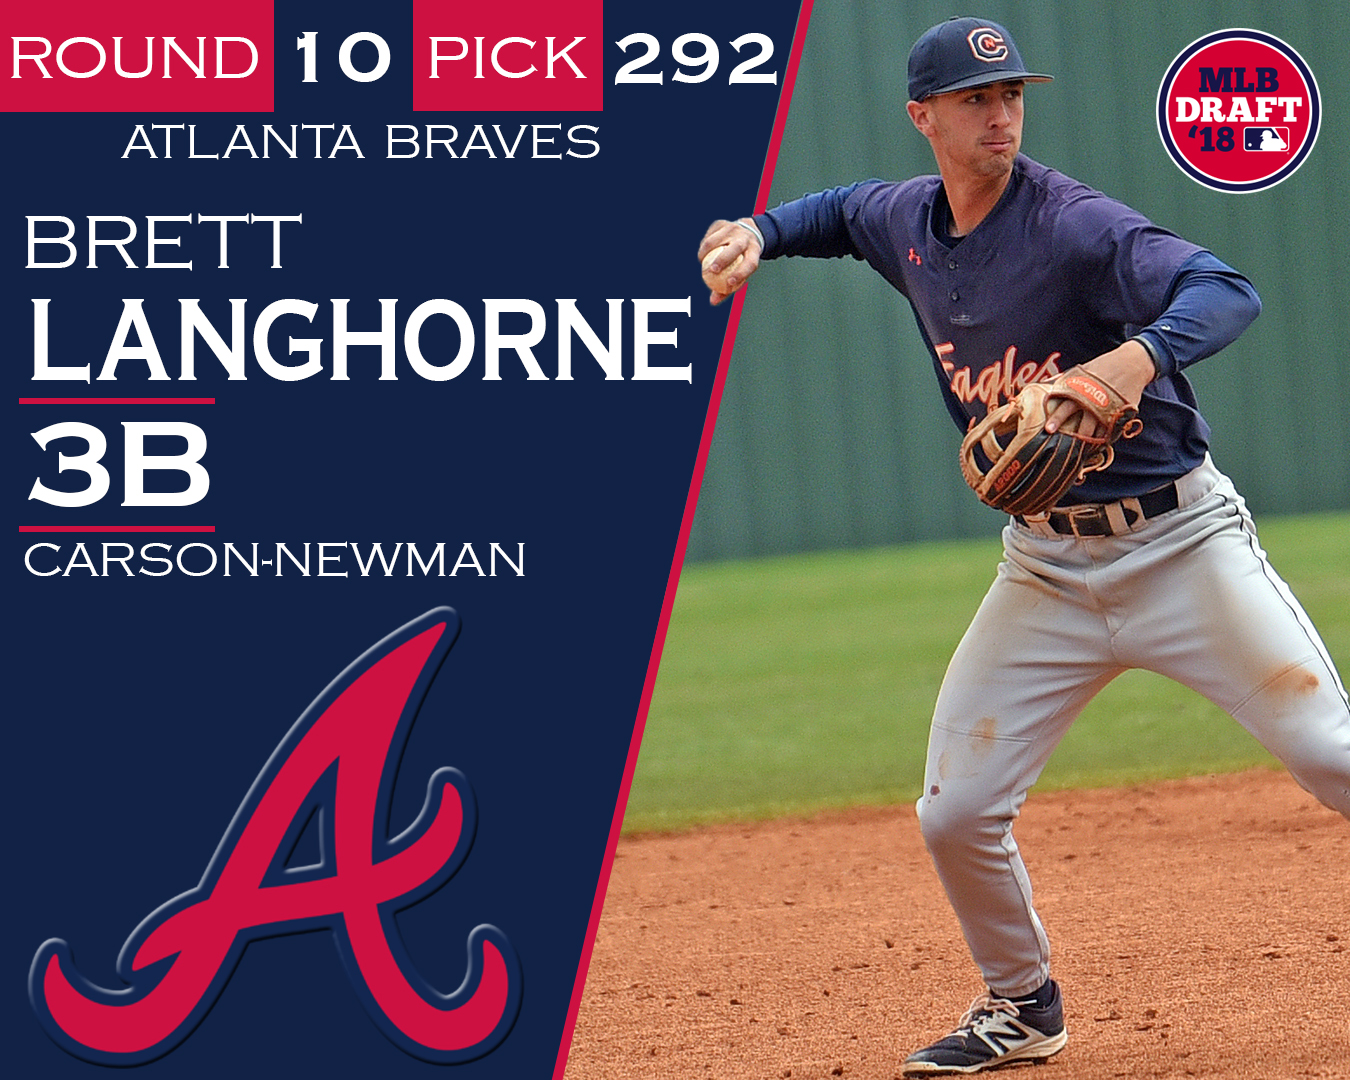 Langhorne picked in 10th round by Atlanta Braves in MLB Draft